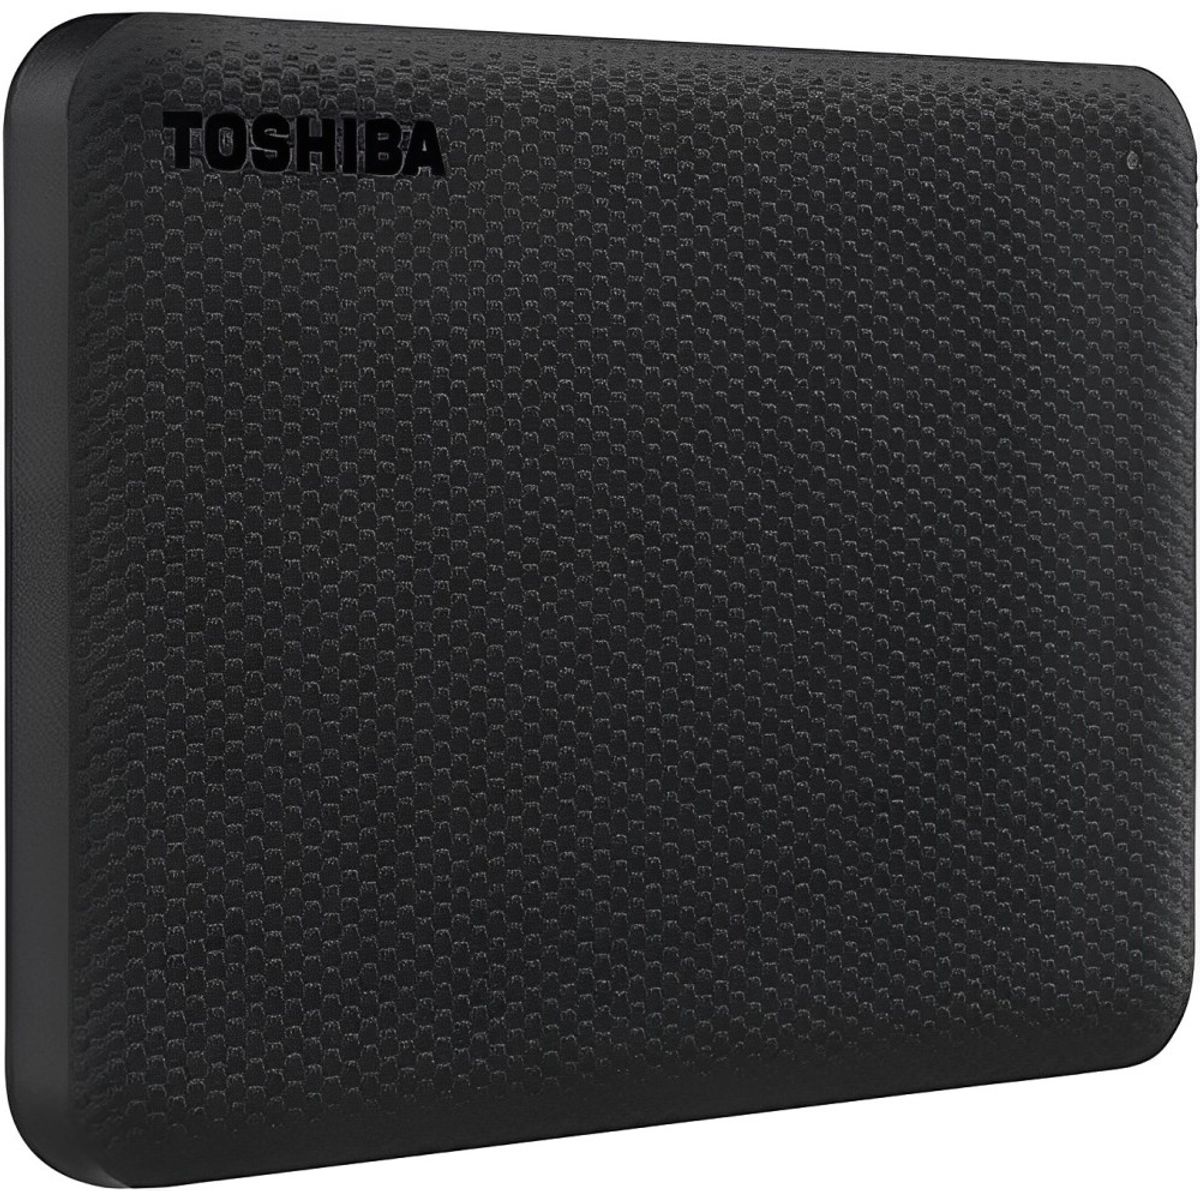 HD Externo Portátil Toshiba 2TB, Canvio